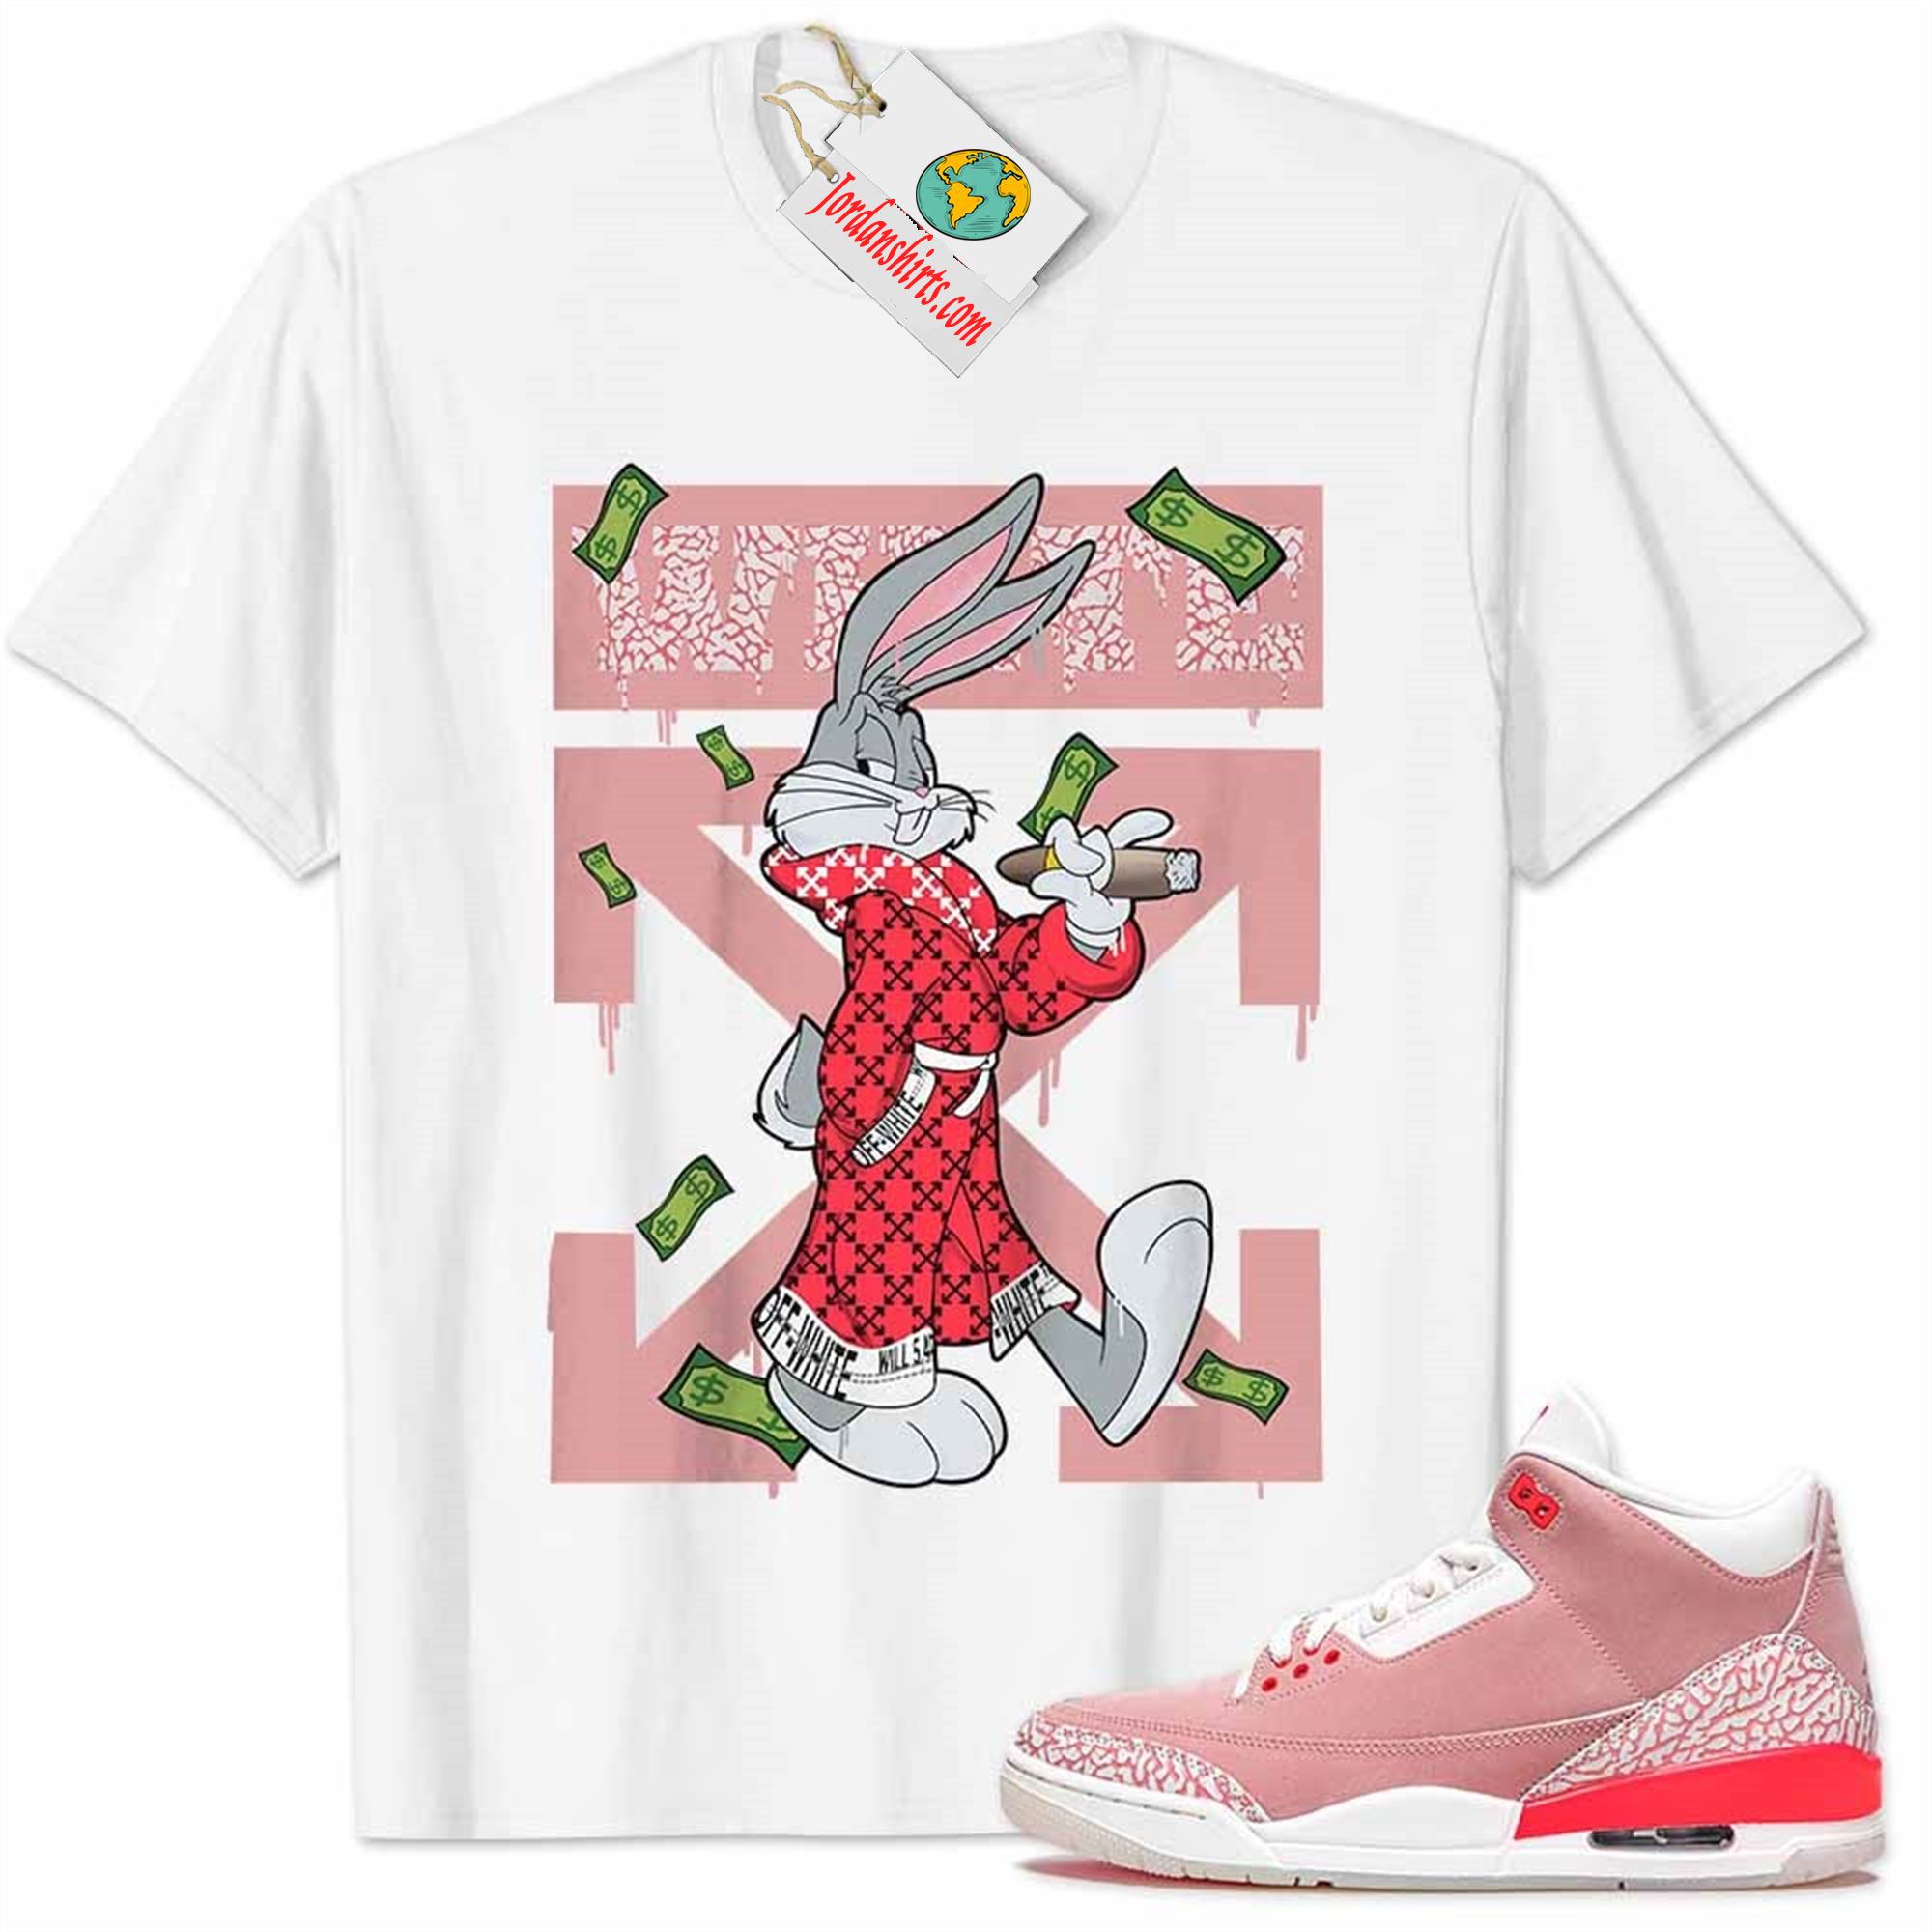 Jordan 3 Shirt, Jordan 3 Rust Pink Shirt Bug Bunny Smokes Weed Money Falling White Size Up To 5xl